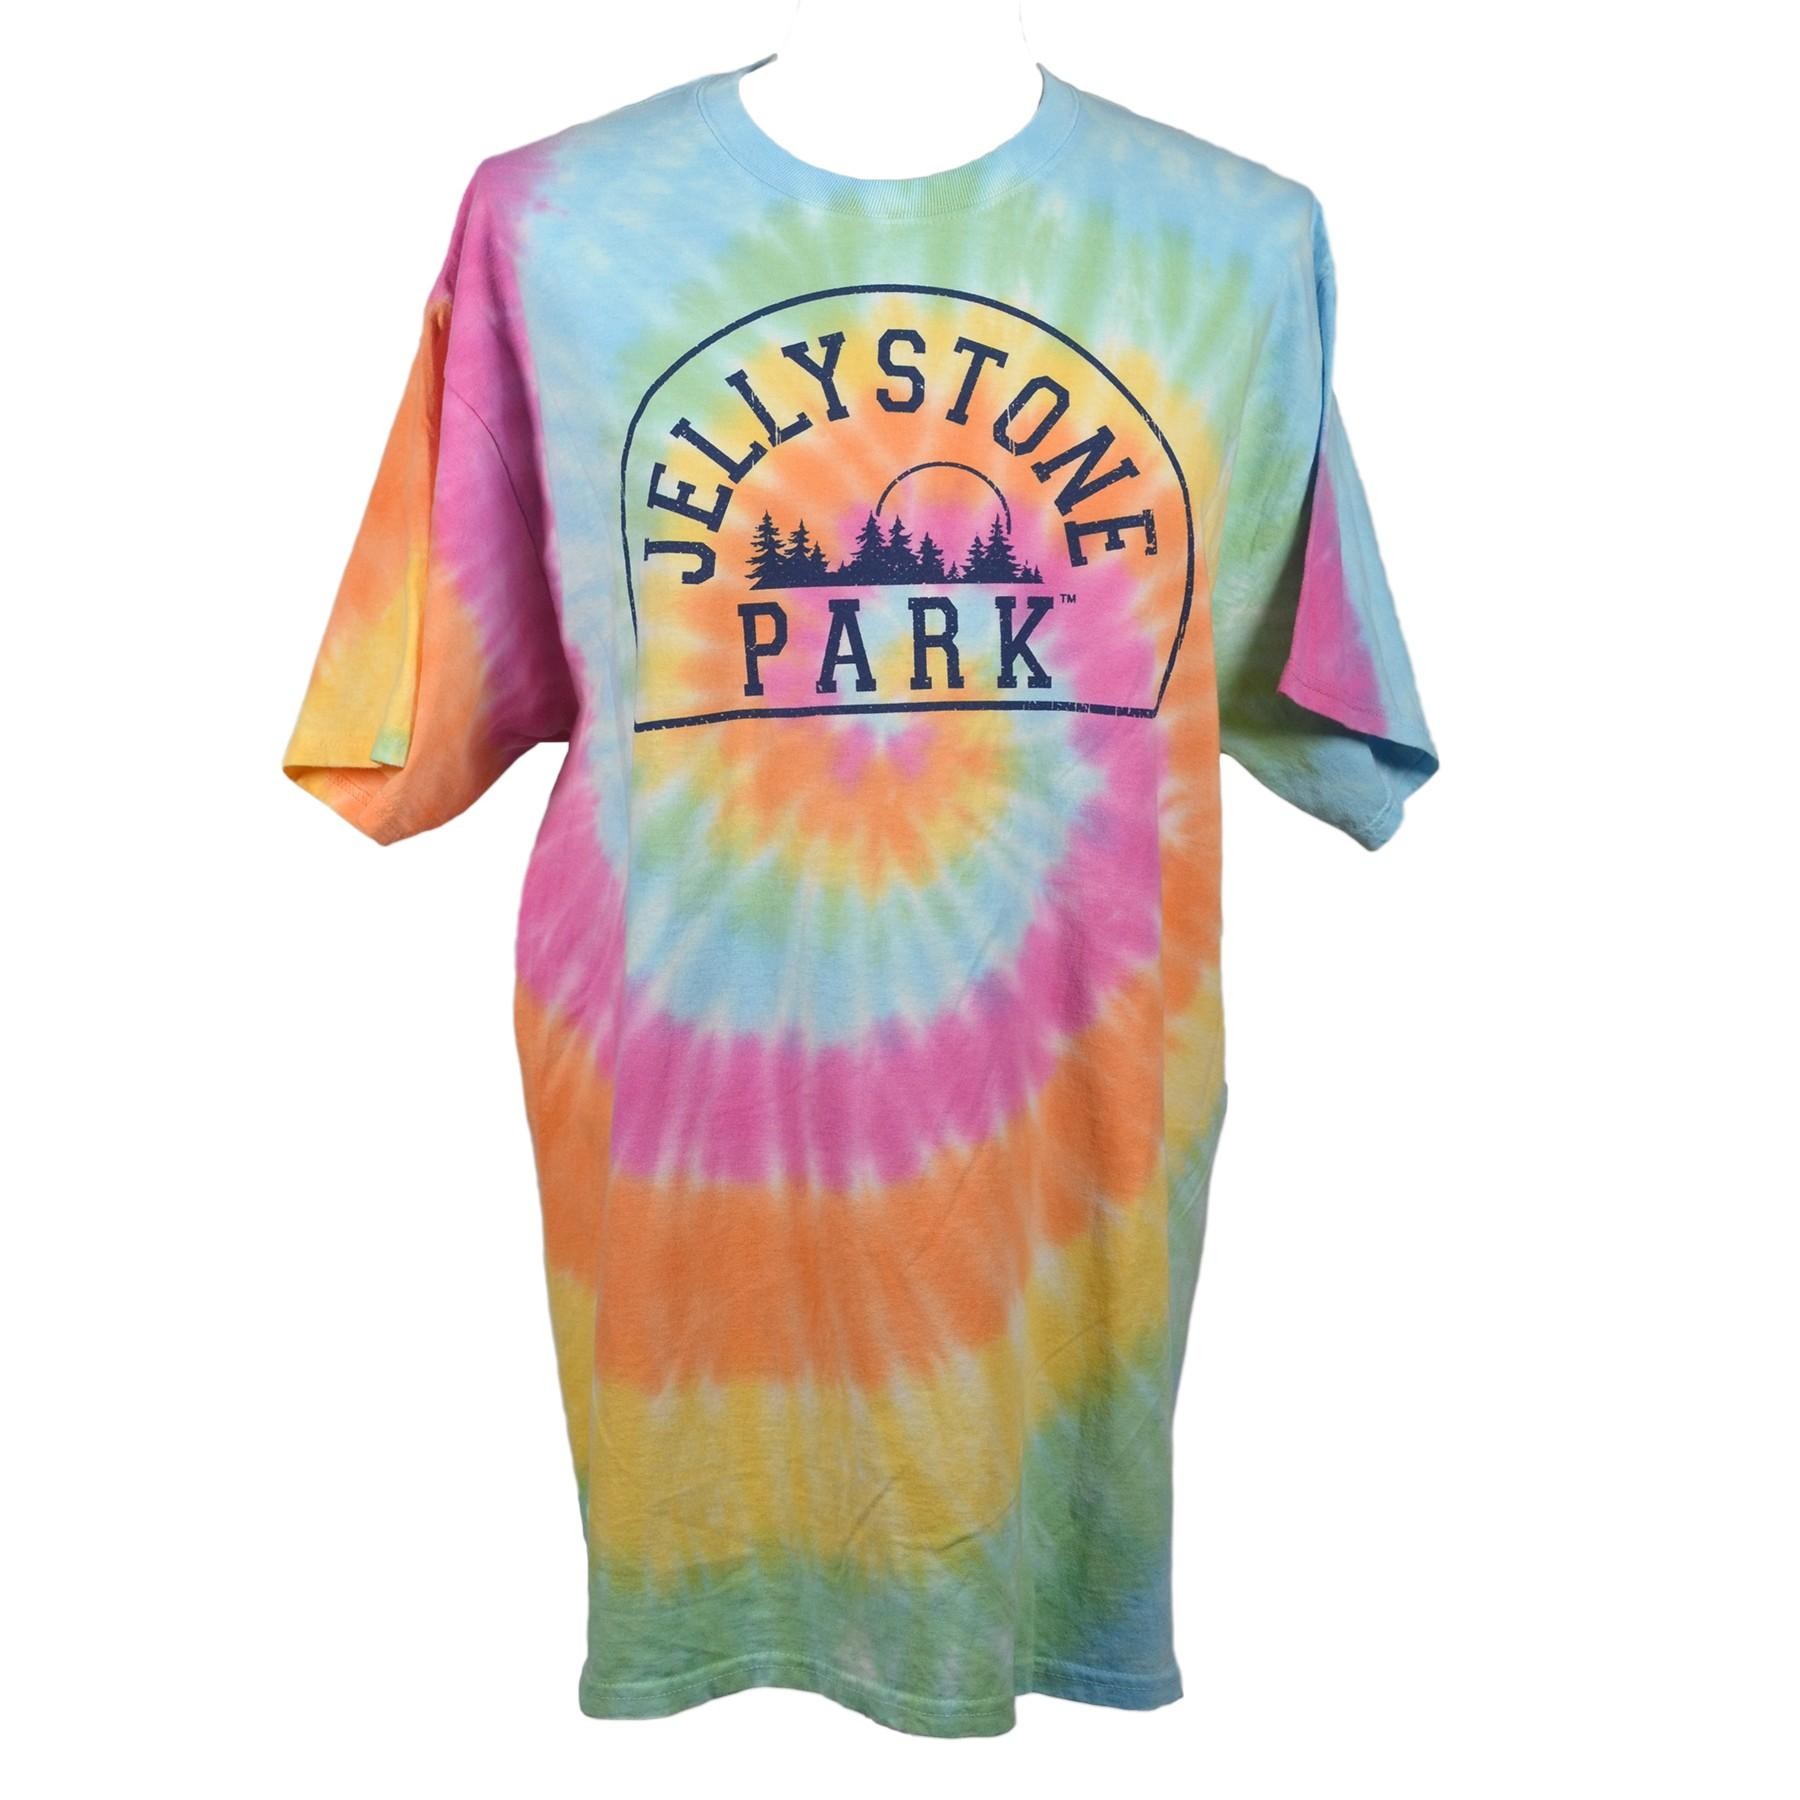 Jellystone Park Pastel Tie-Dye T-Shirt (S-XL)